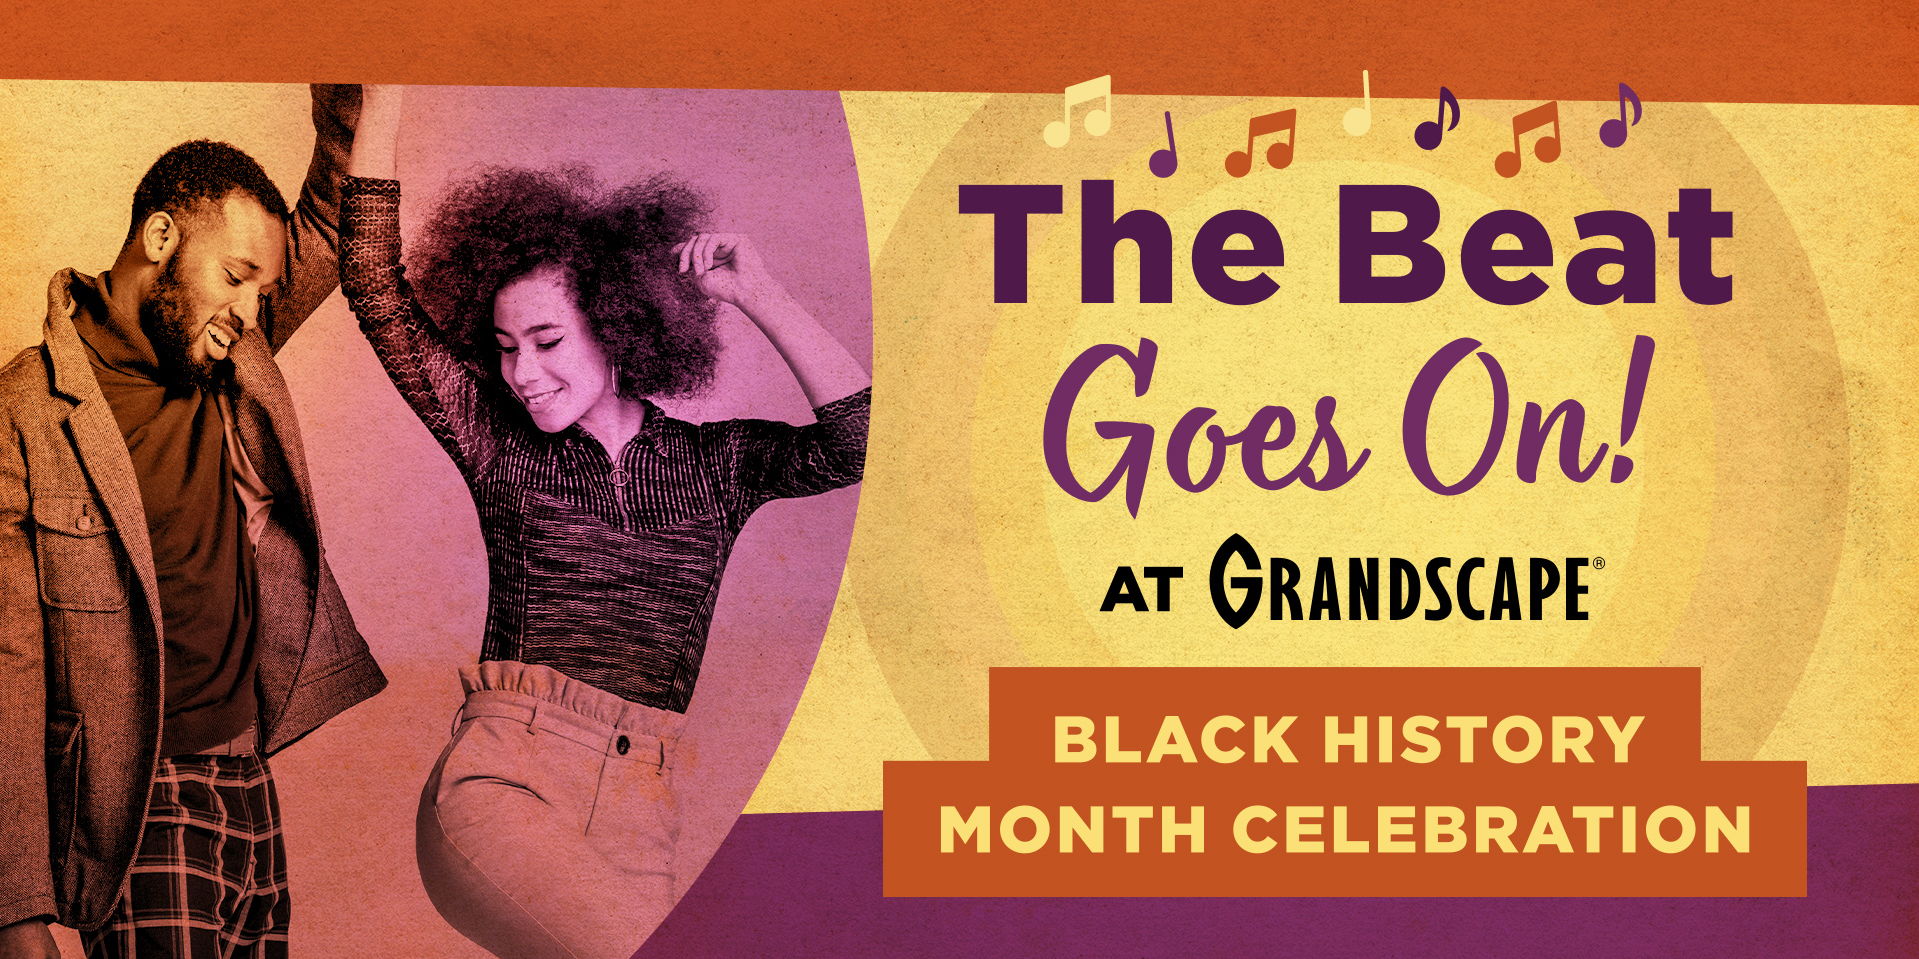 The Beat Goes On! Black History Month Celebration promotional image